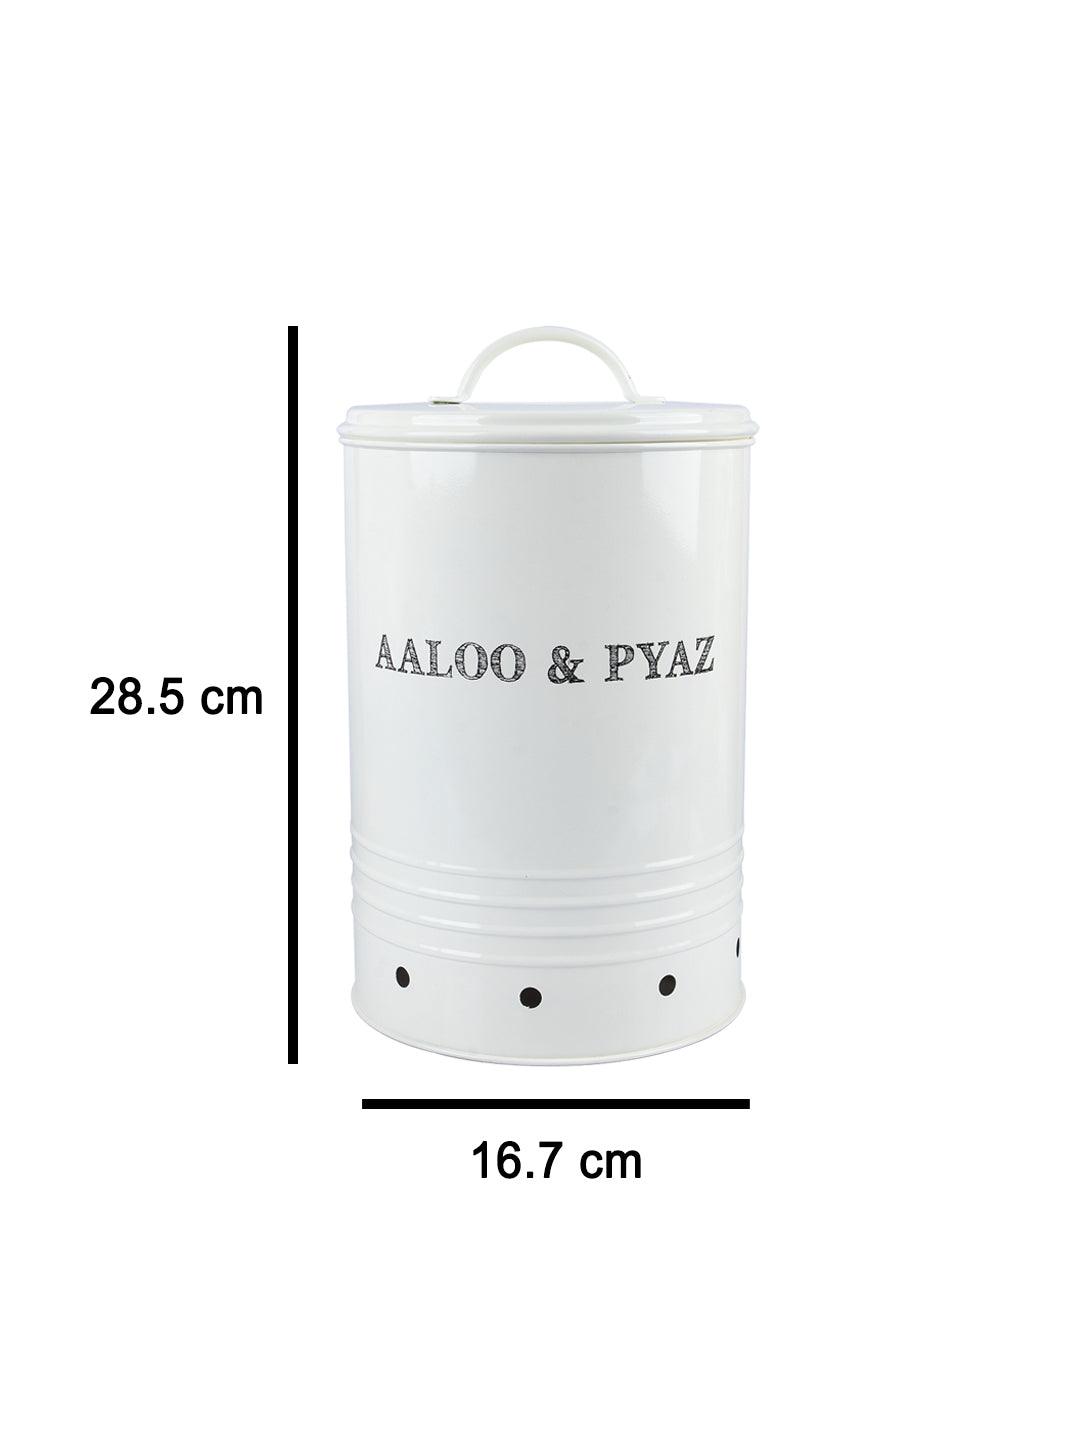 Aaloo & Pyaj Storage Jar - MARKET 99